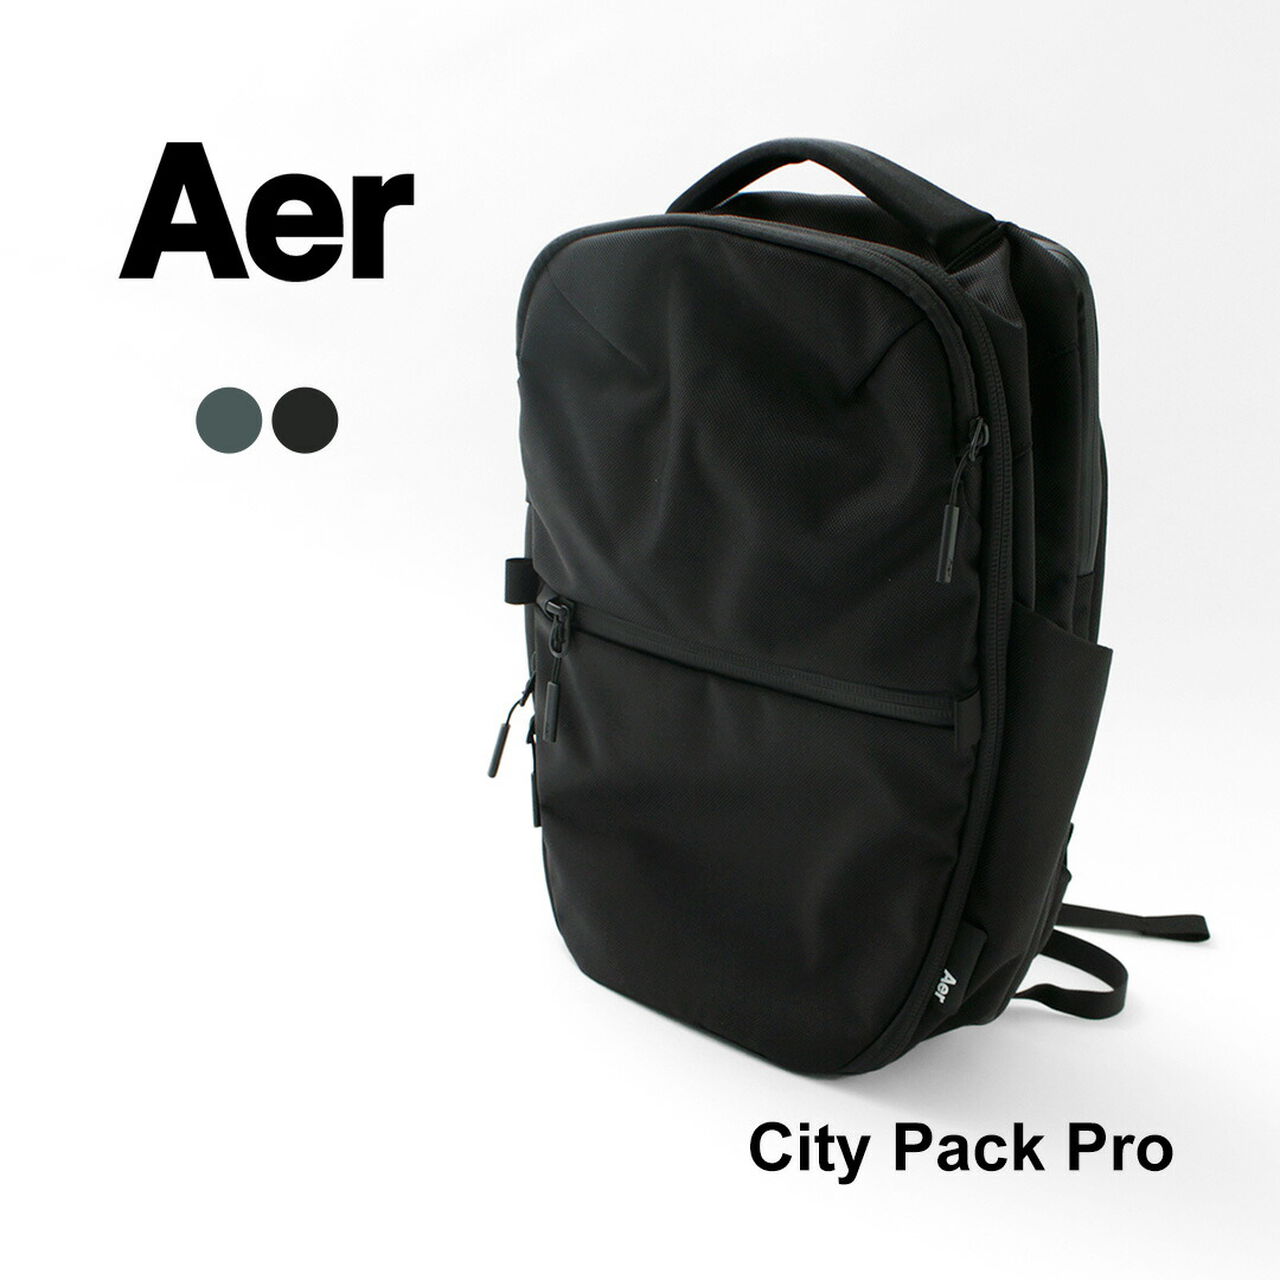 City Pack Pro – Aer